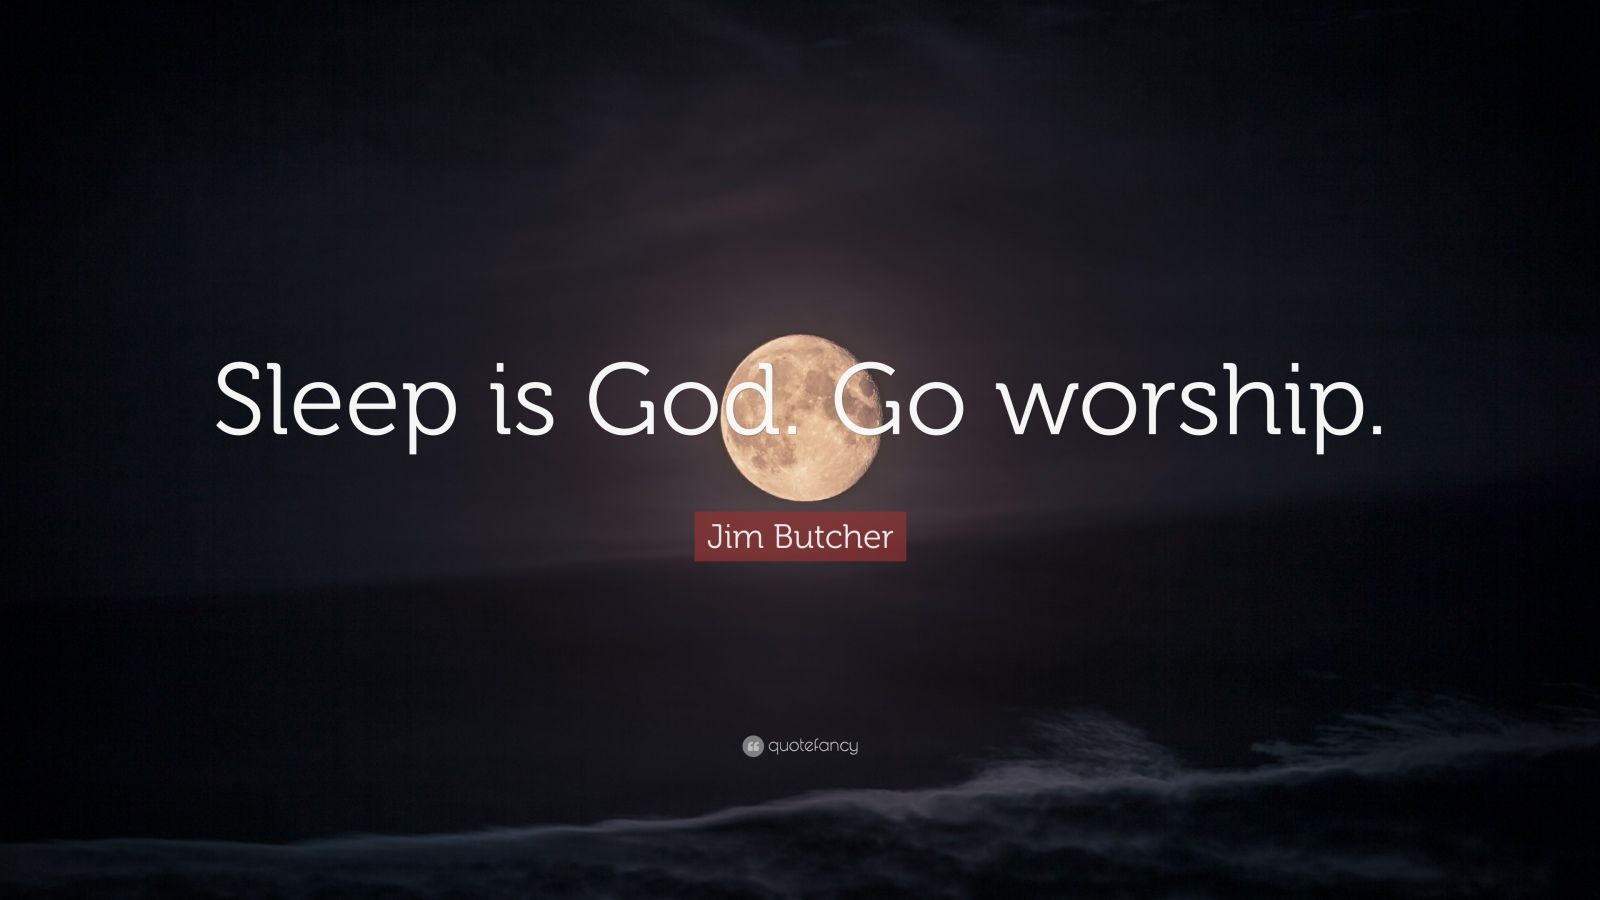 Sleep Worship. Conscience is asleep. Go with God. She Venerated Jim.